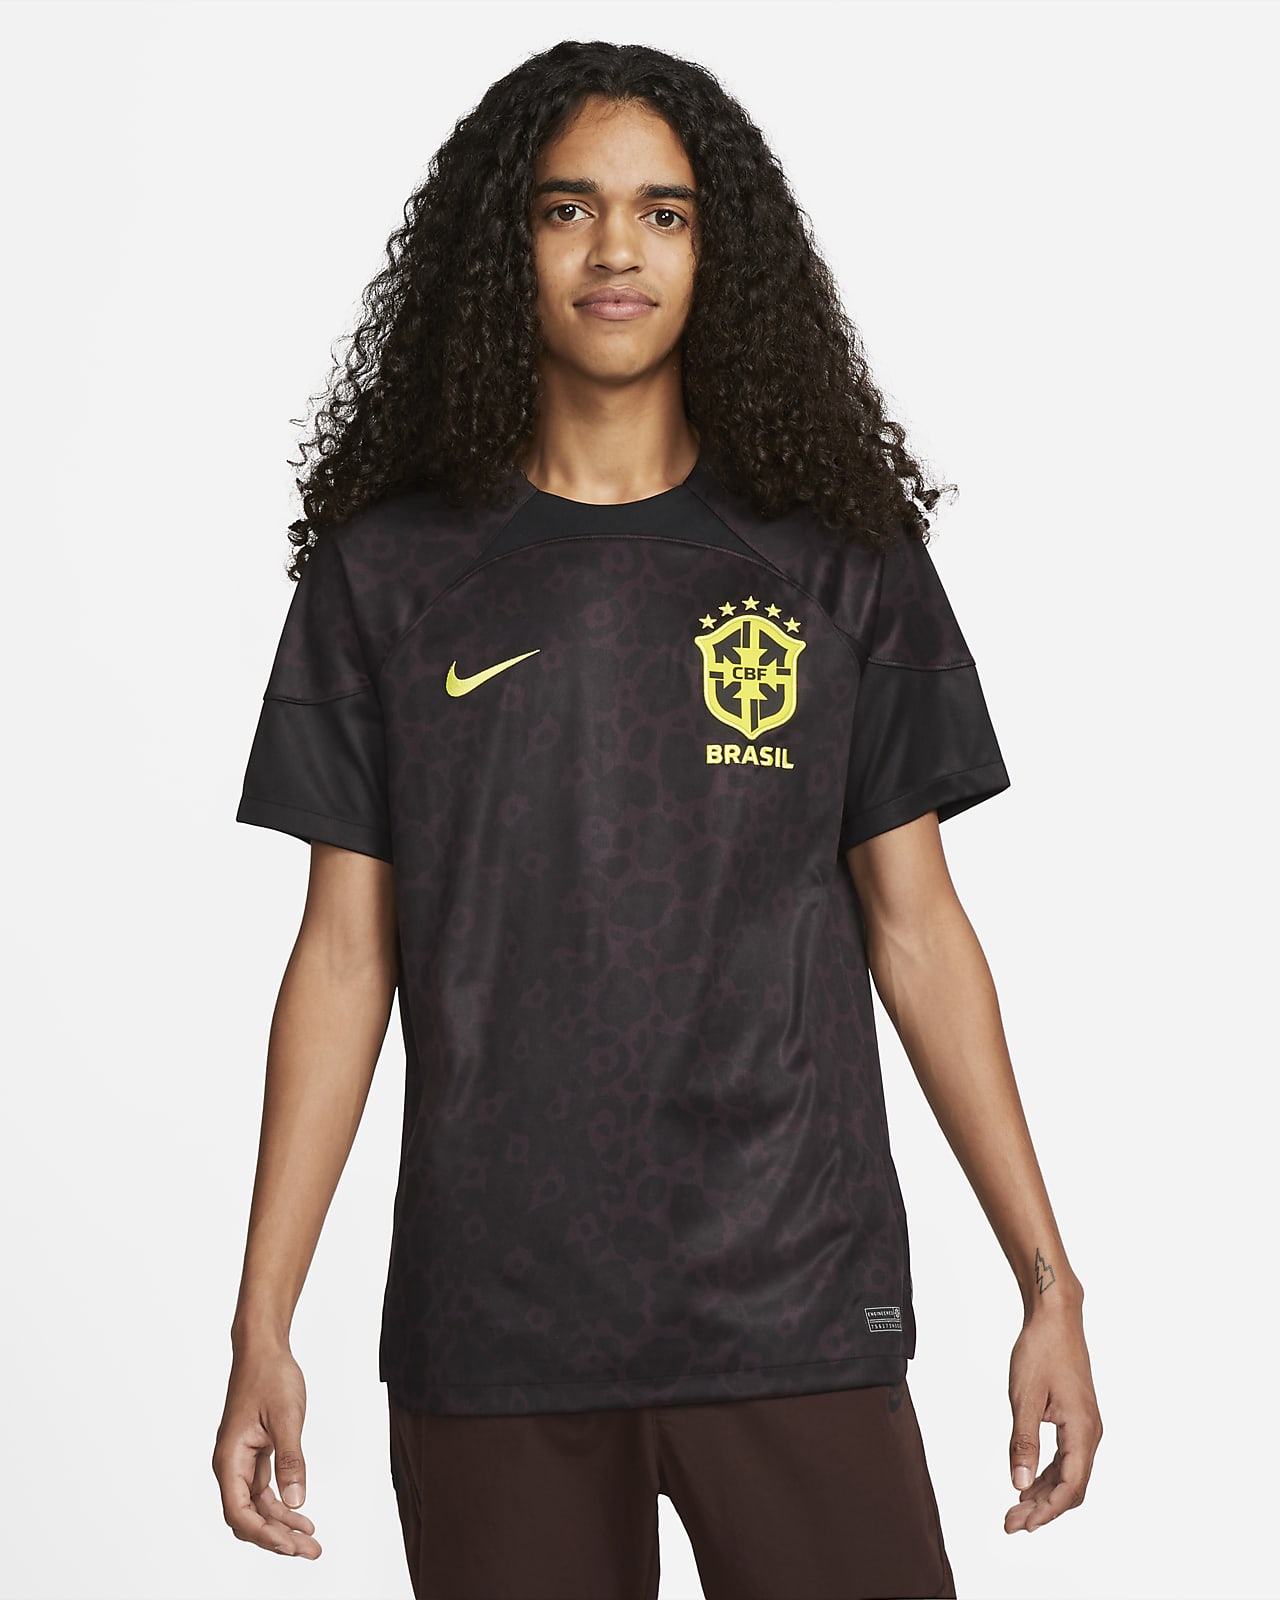 Brazil Goalkeeper Jersey 2022 World Cup Kit, S